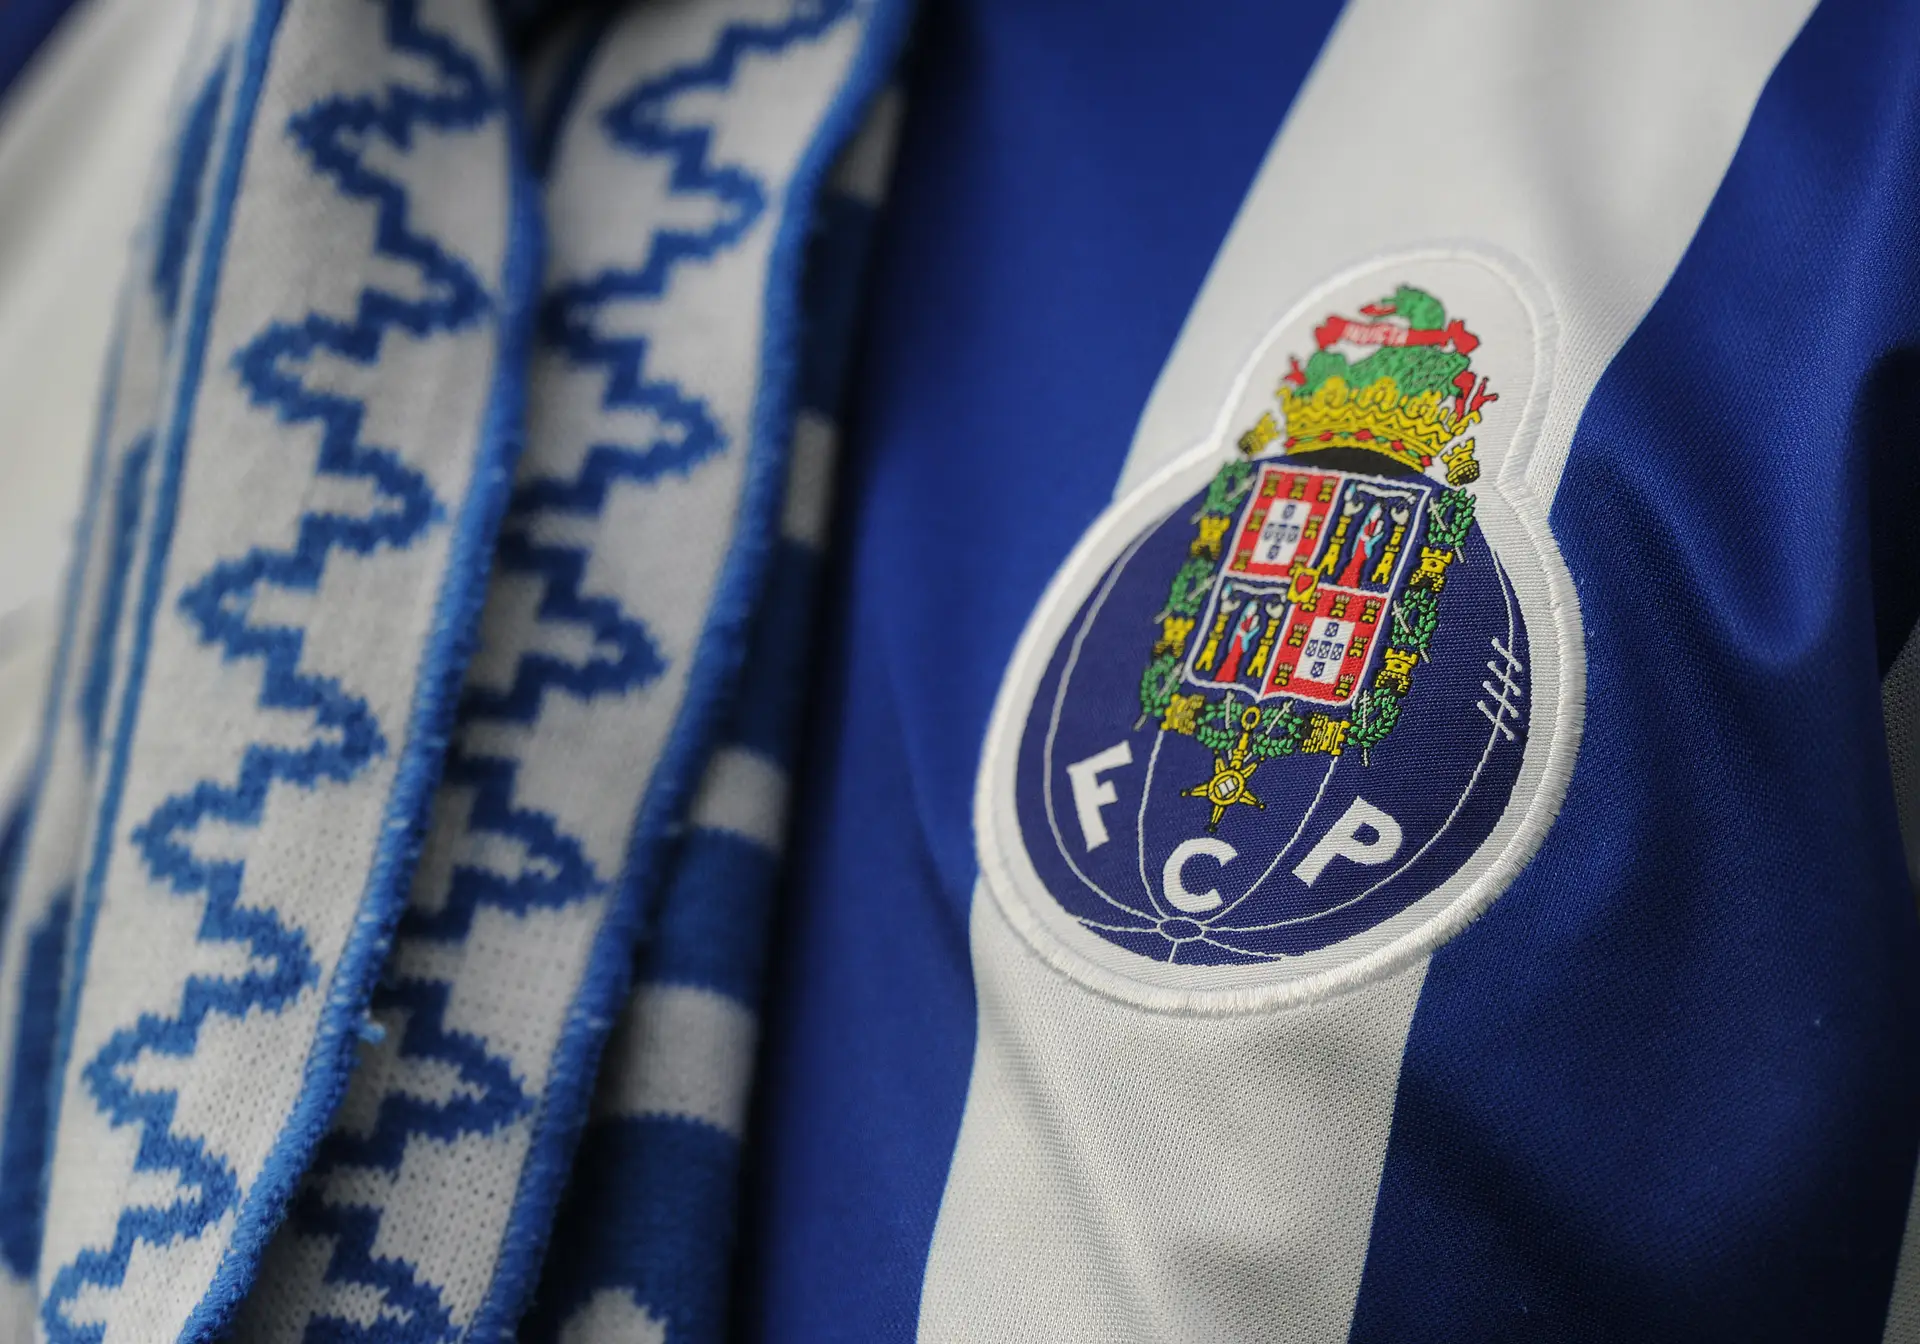 Adepto do FC Porto proibido de frequentar estádios por uso de pirotecnia